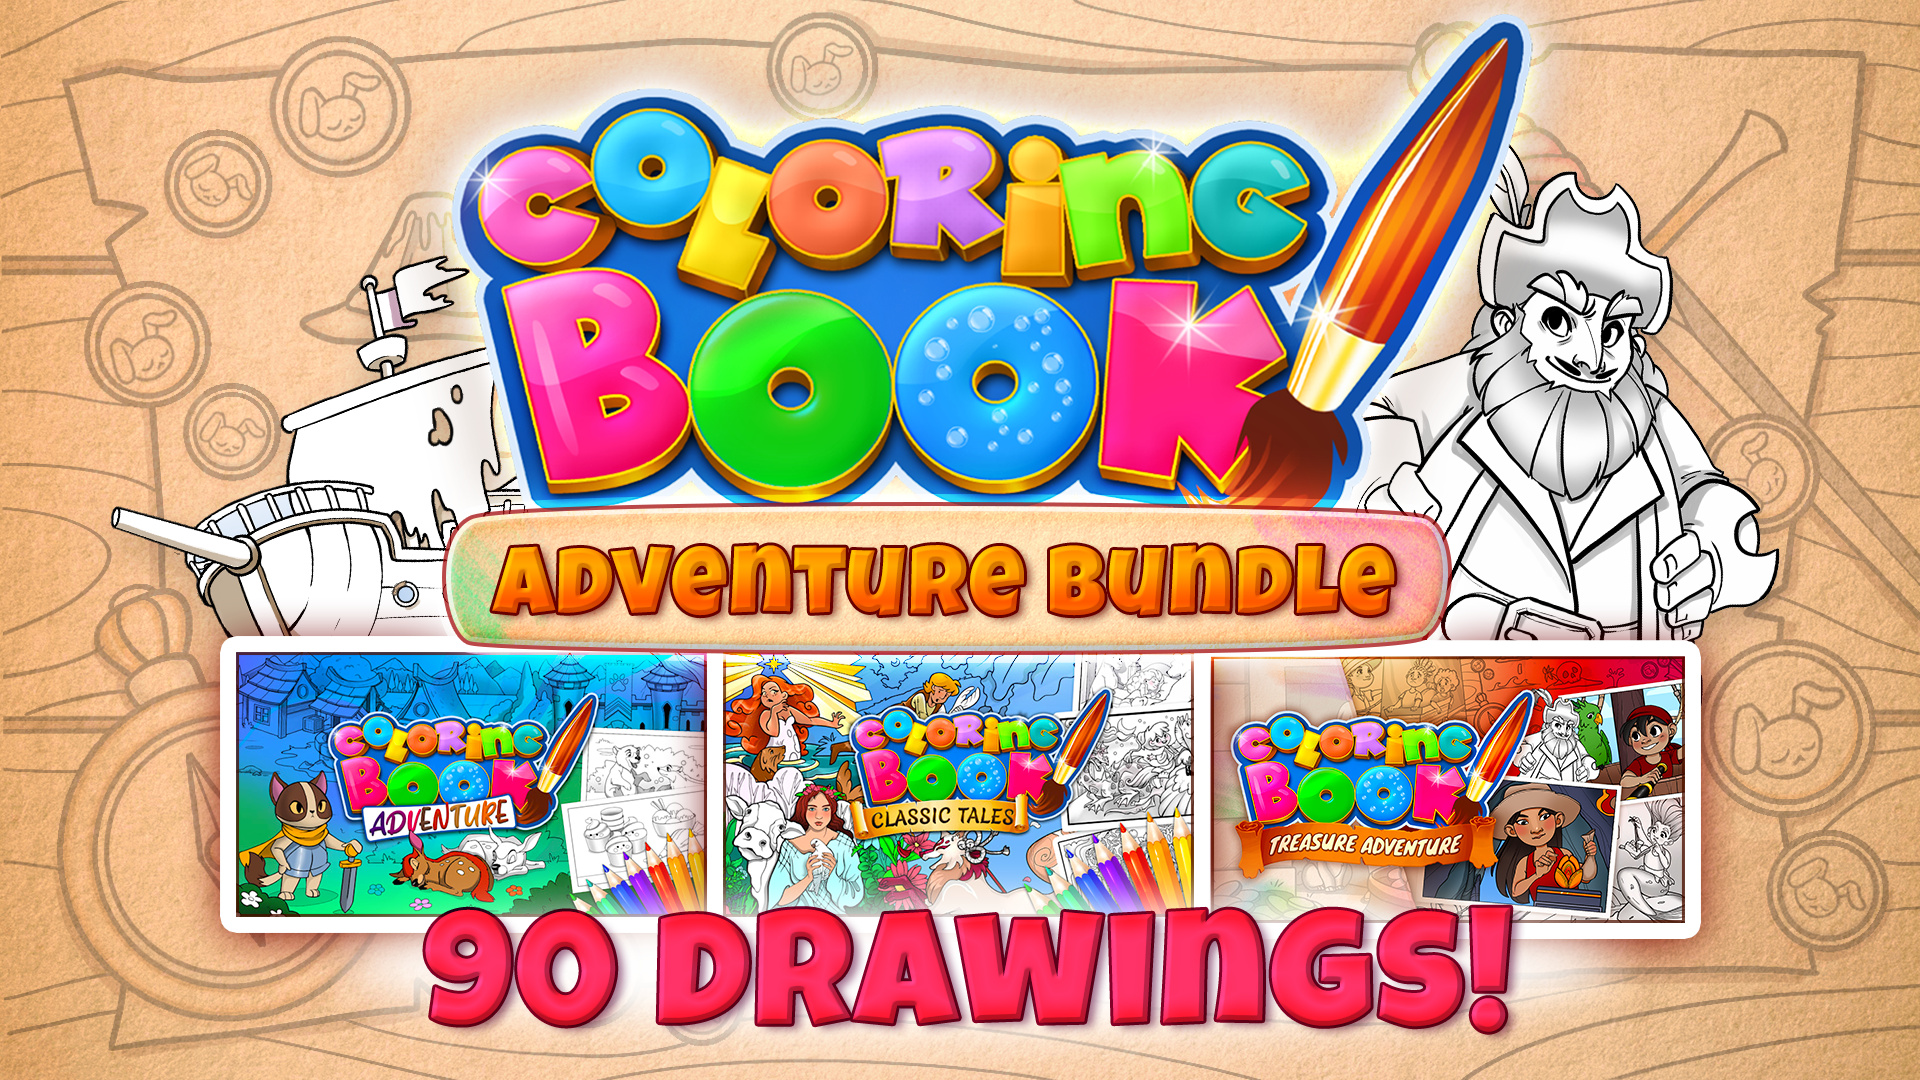 Coloring Book: Adventure Bundle - 90 drawings (🇨🇦 5.42€)